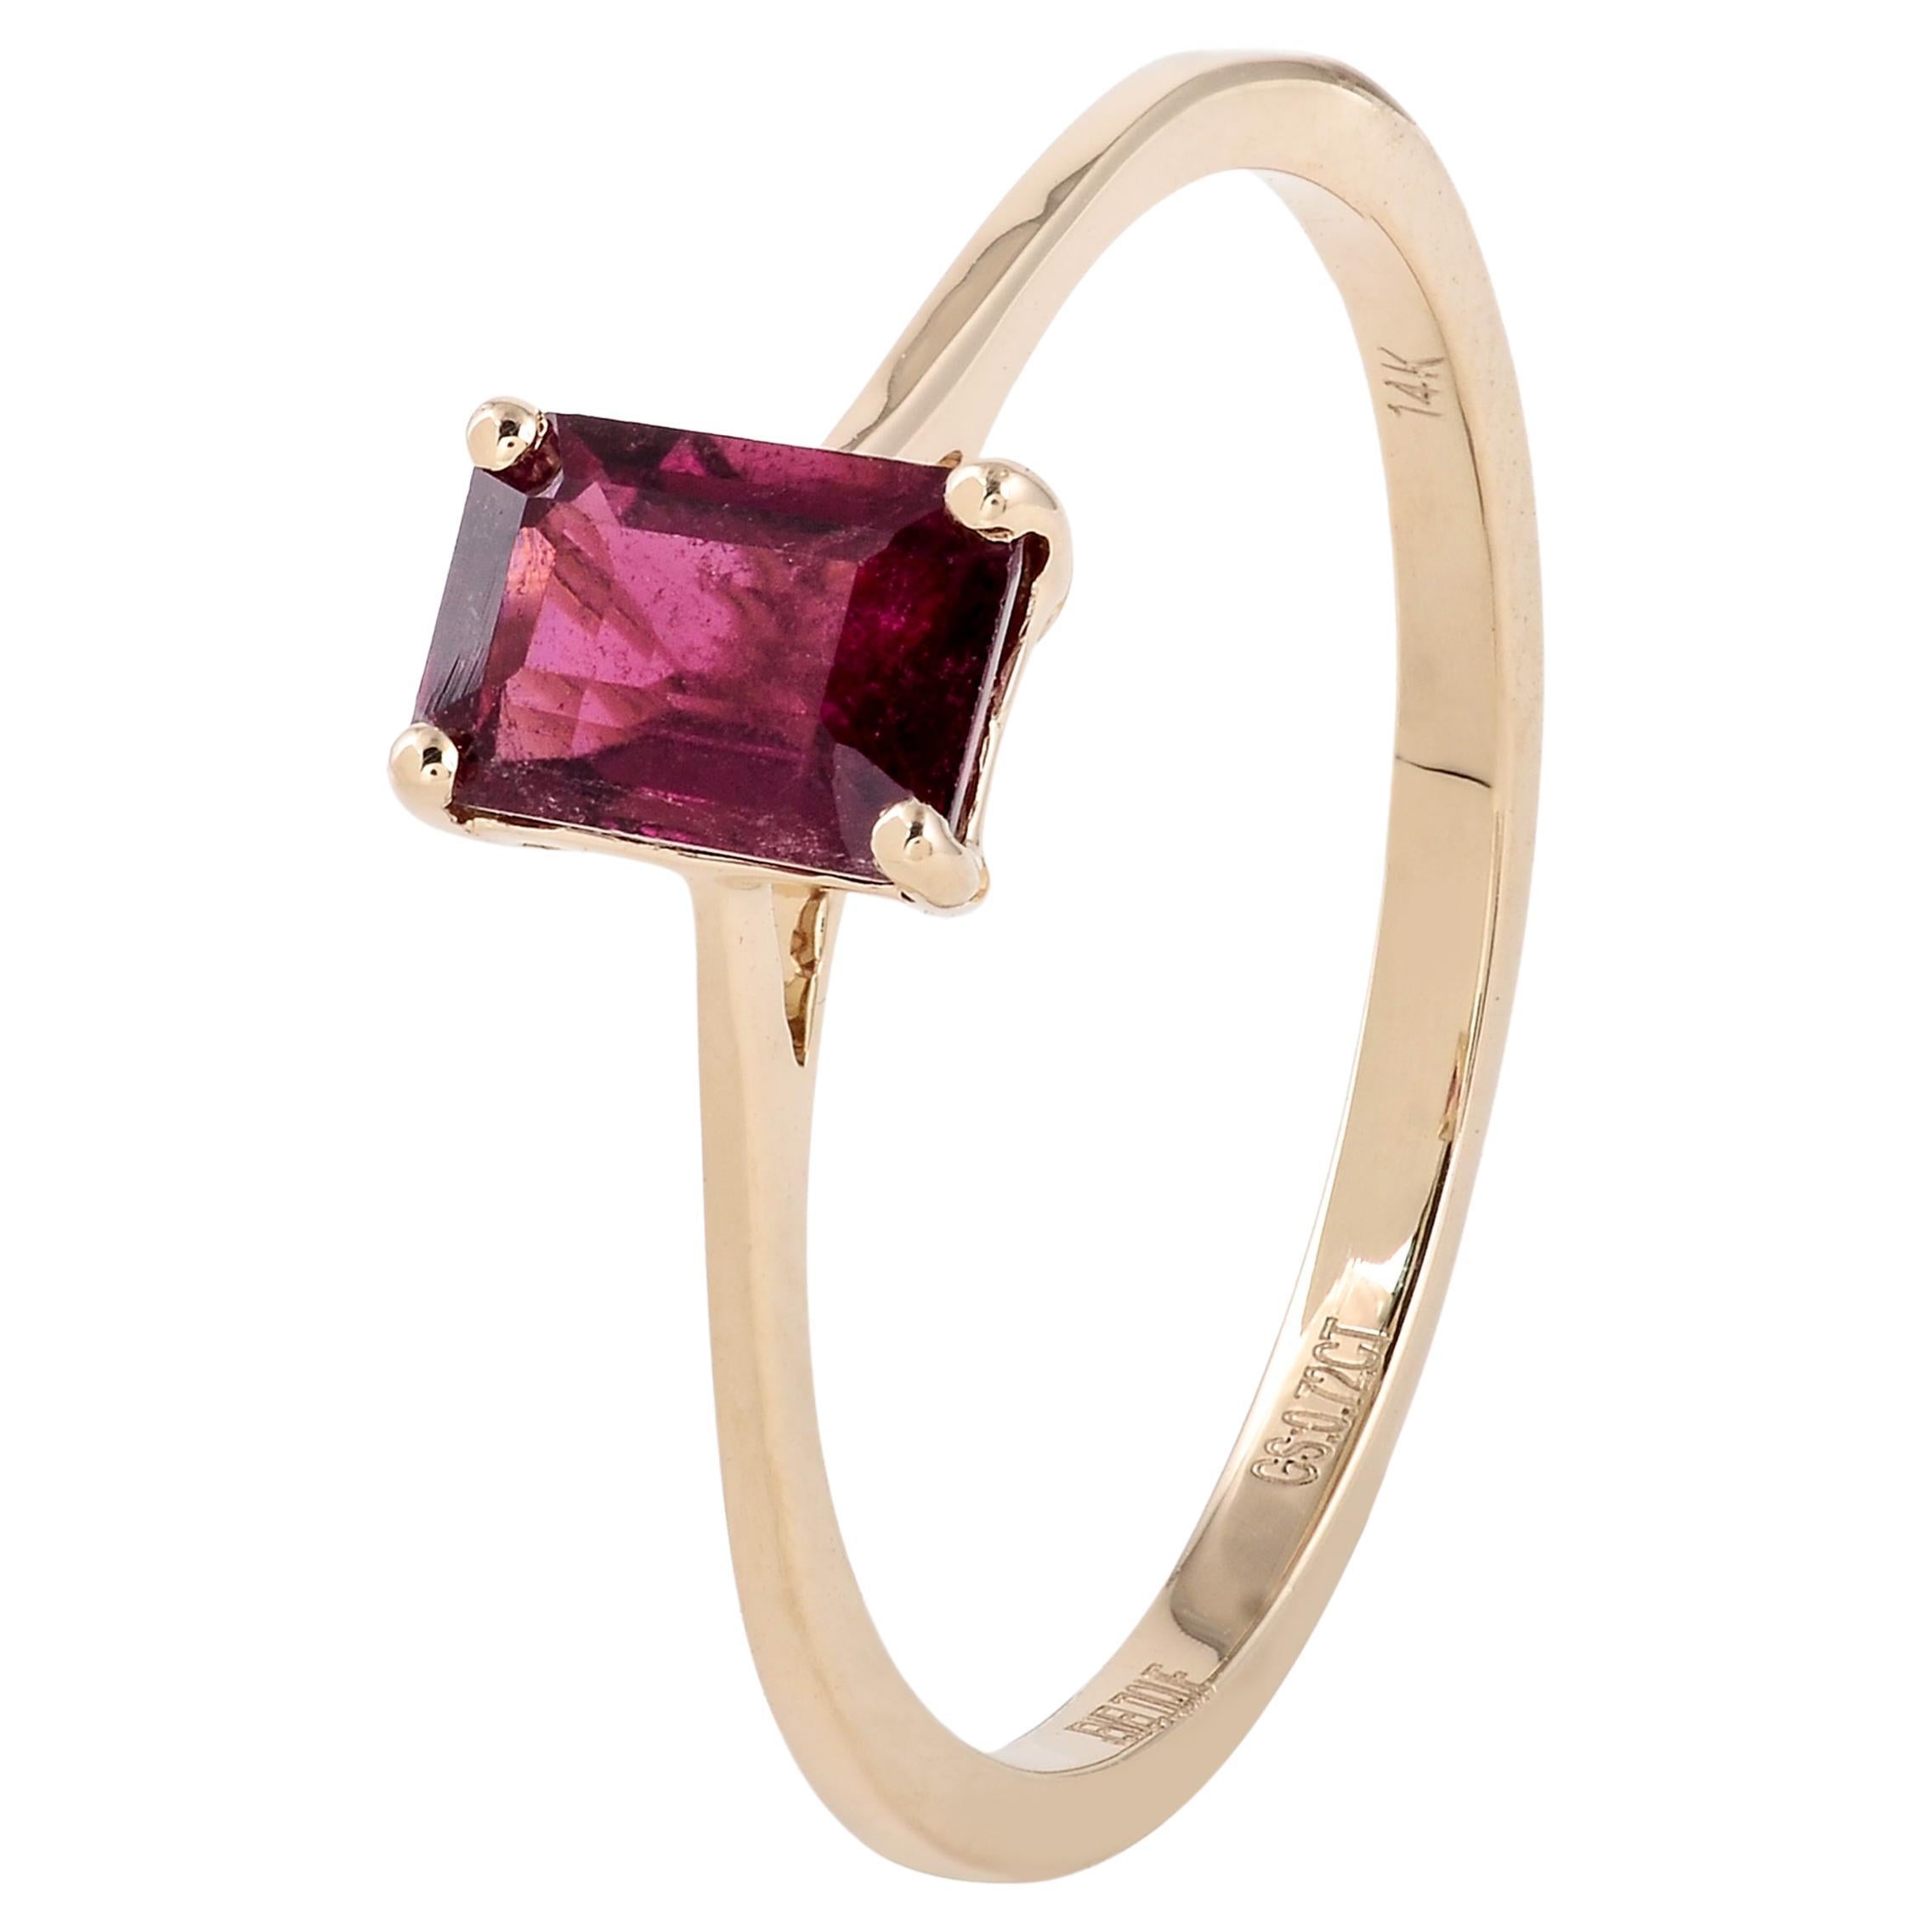 Elegant 14K Tourmaline Cocktail Ring, Size 7 - Stunning Statement Jewelry Piece For Sale